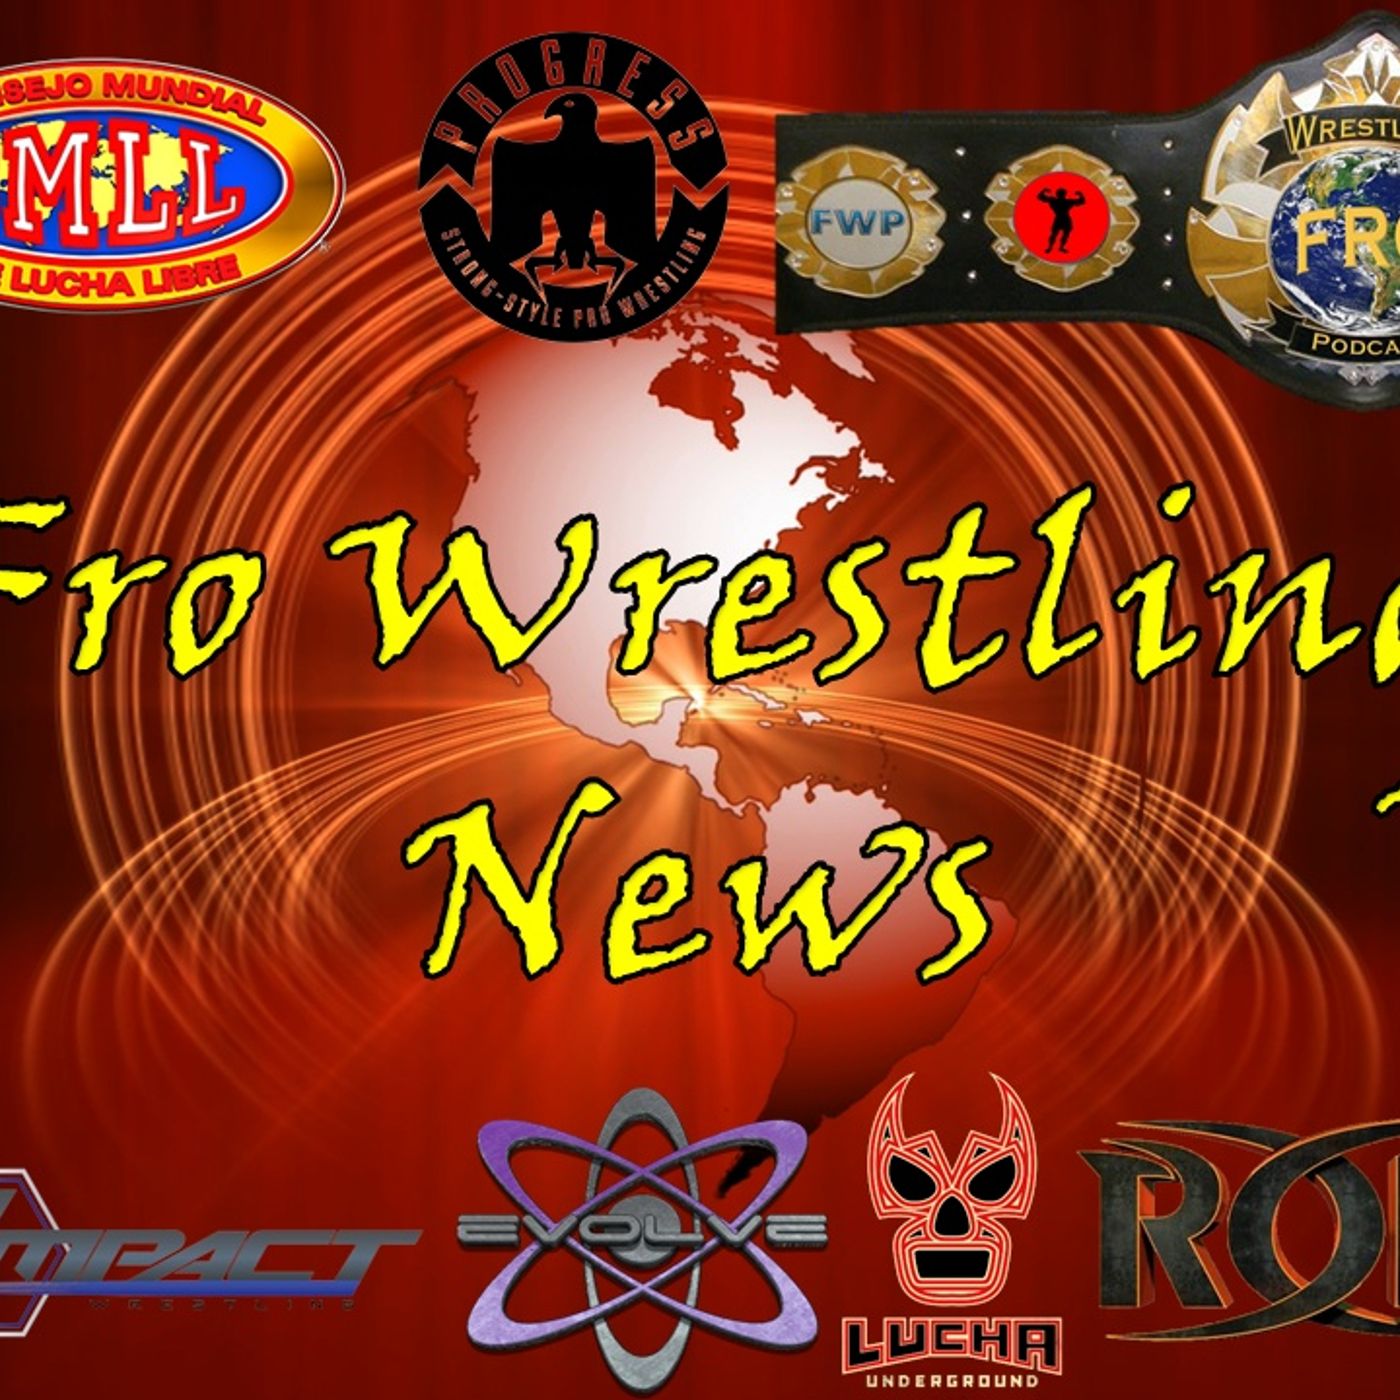 Fro Wrestling News - THE SHIELD RETURNS!